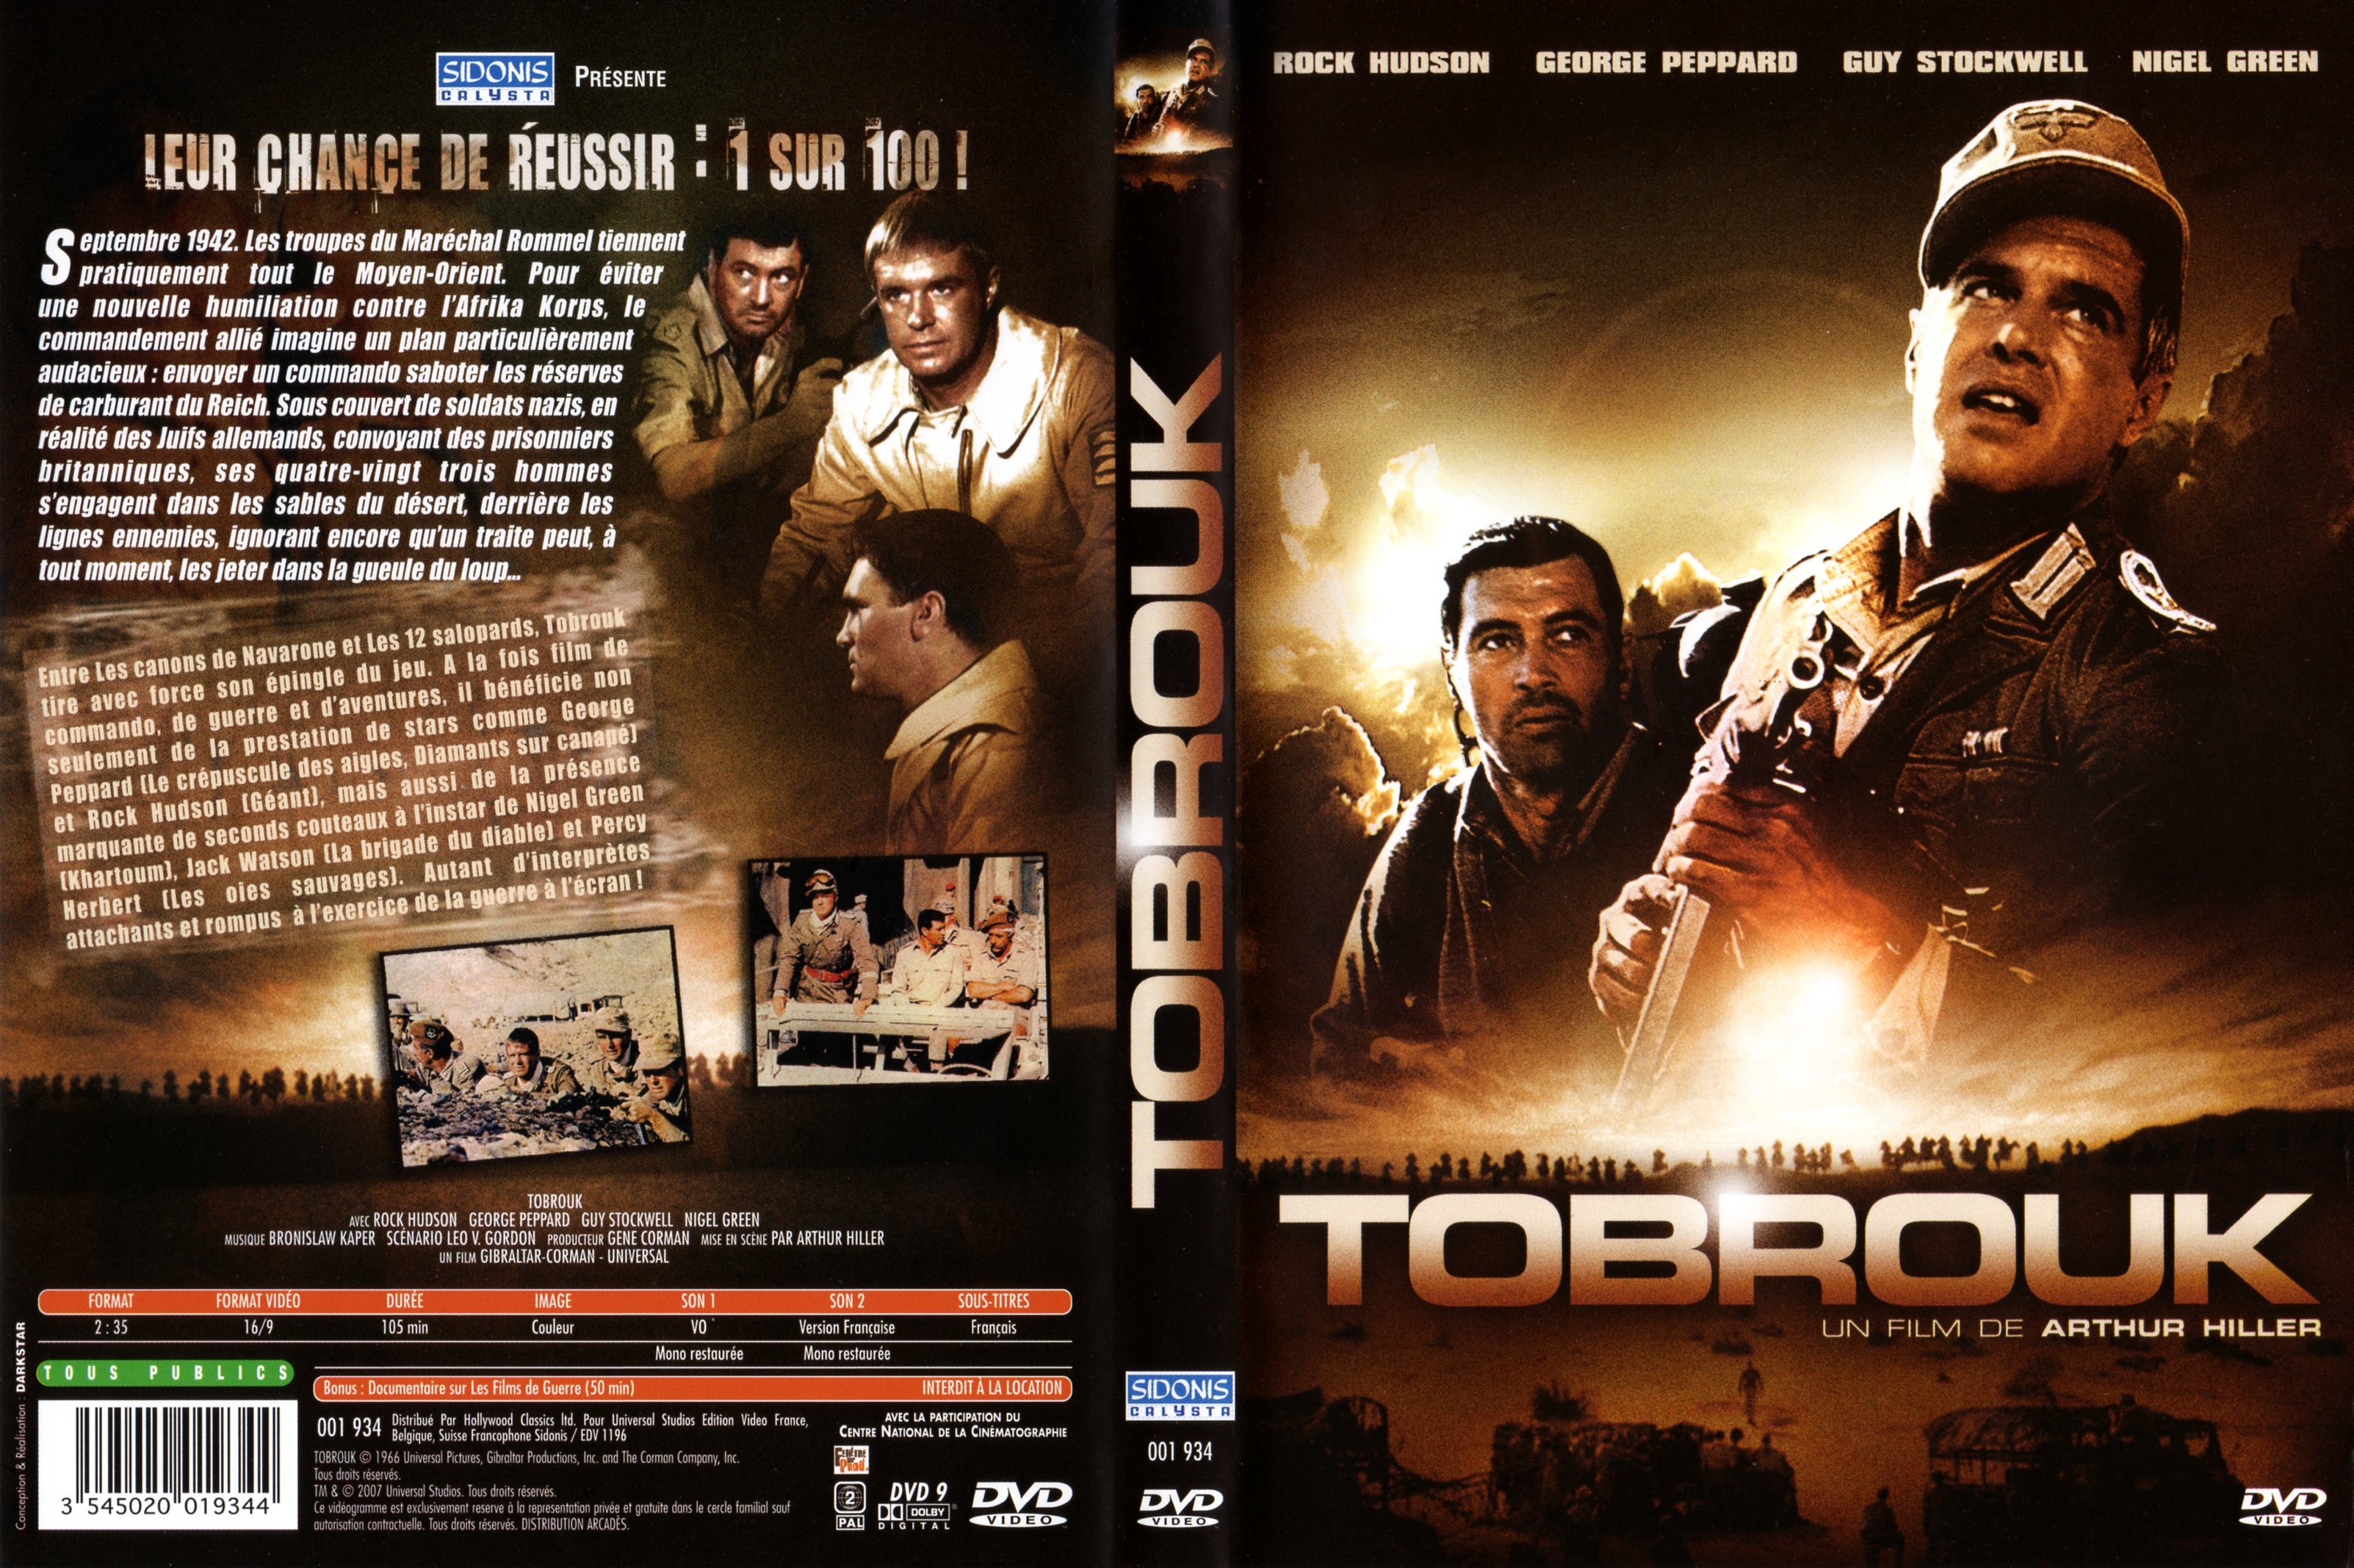 Jaquette DVD Tobrouk